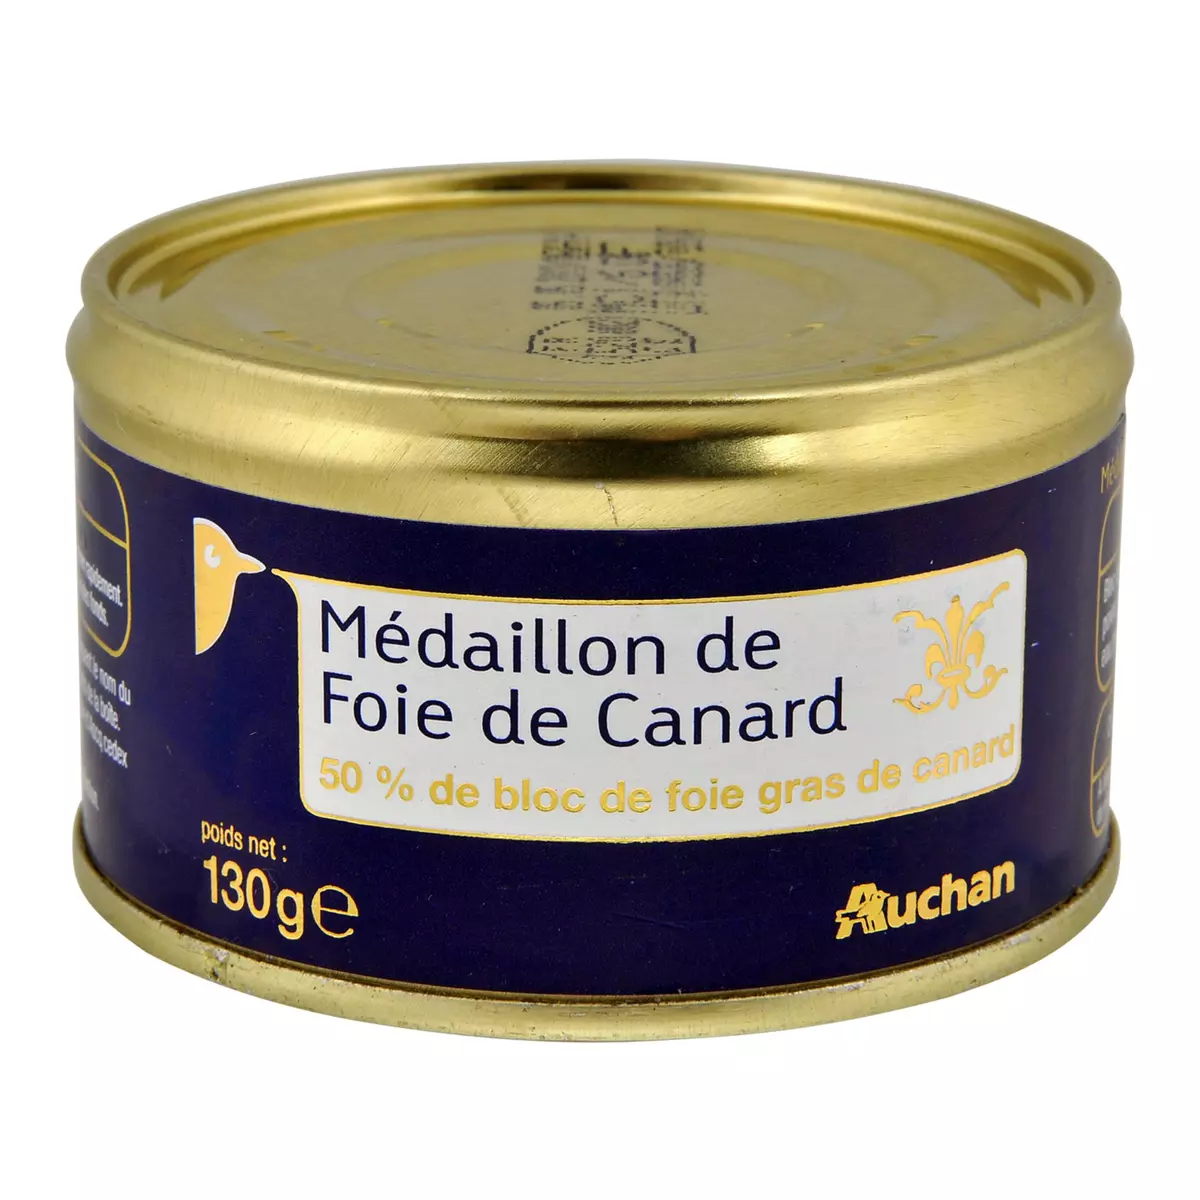 AUCHAN Médaillon de foie de canard 50% de bloc de foie gras de canard 130g